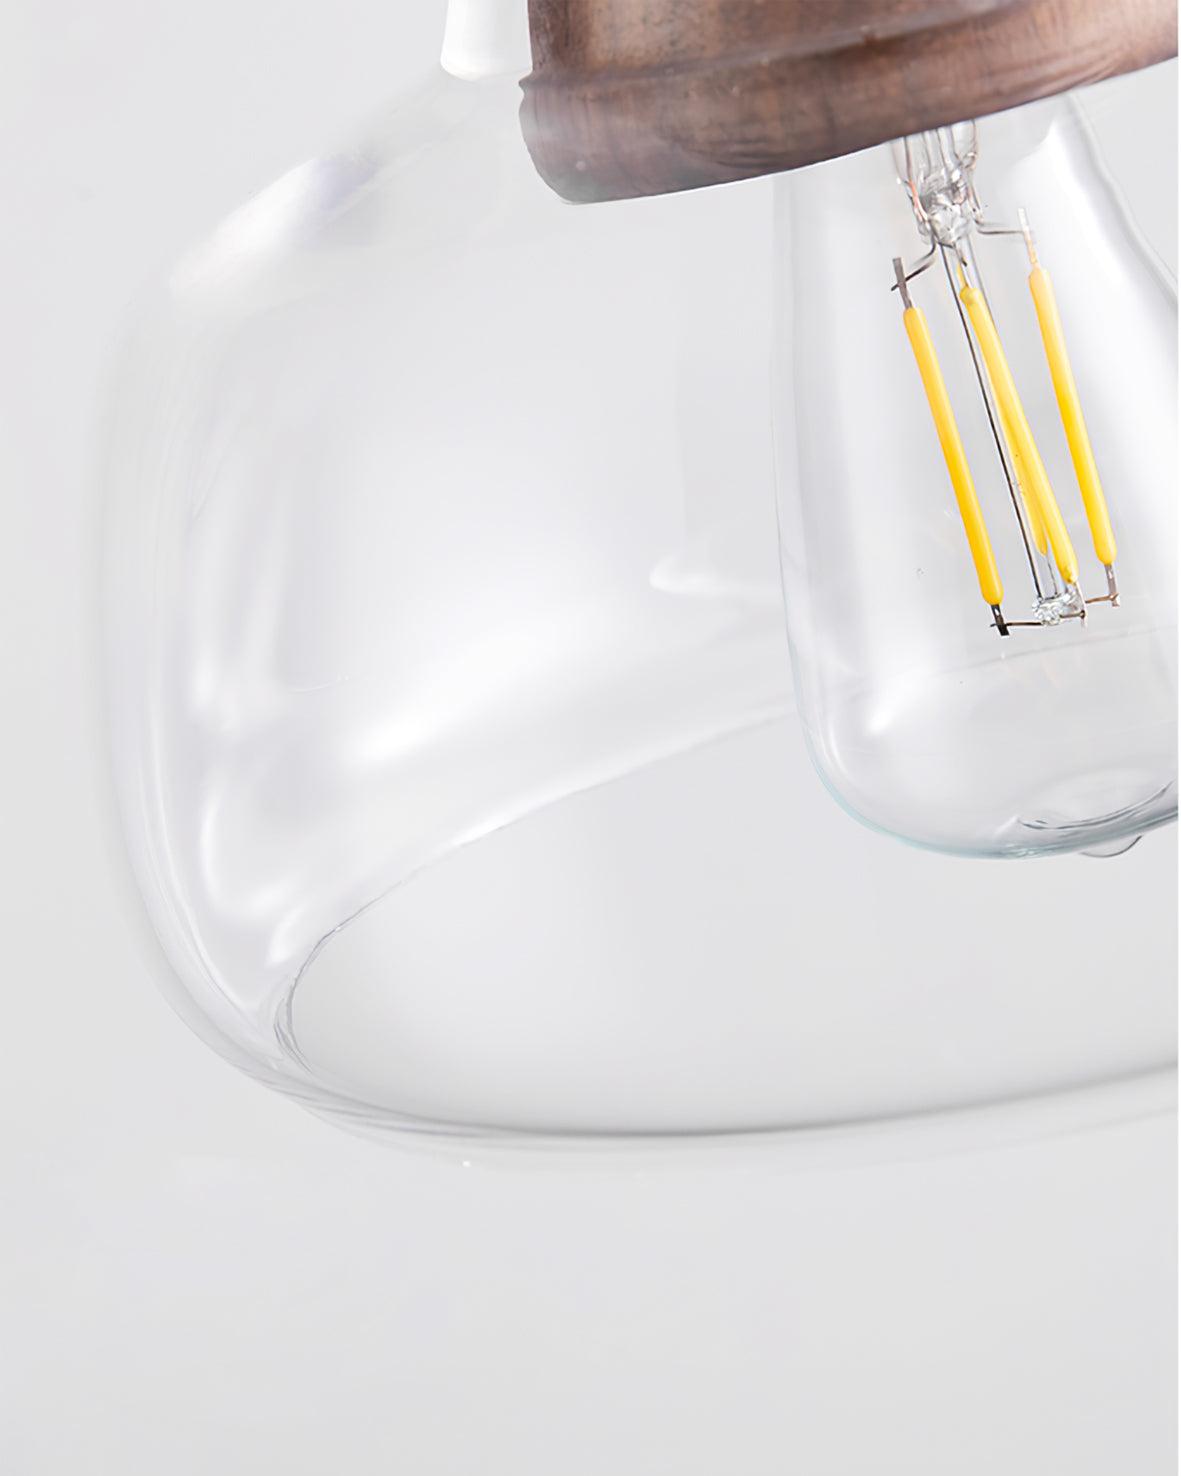 Walnut Glass Pendant Lamp 6.3″ - Docos